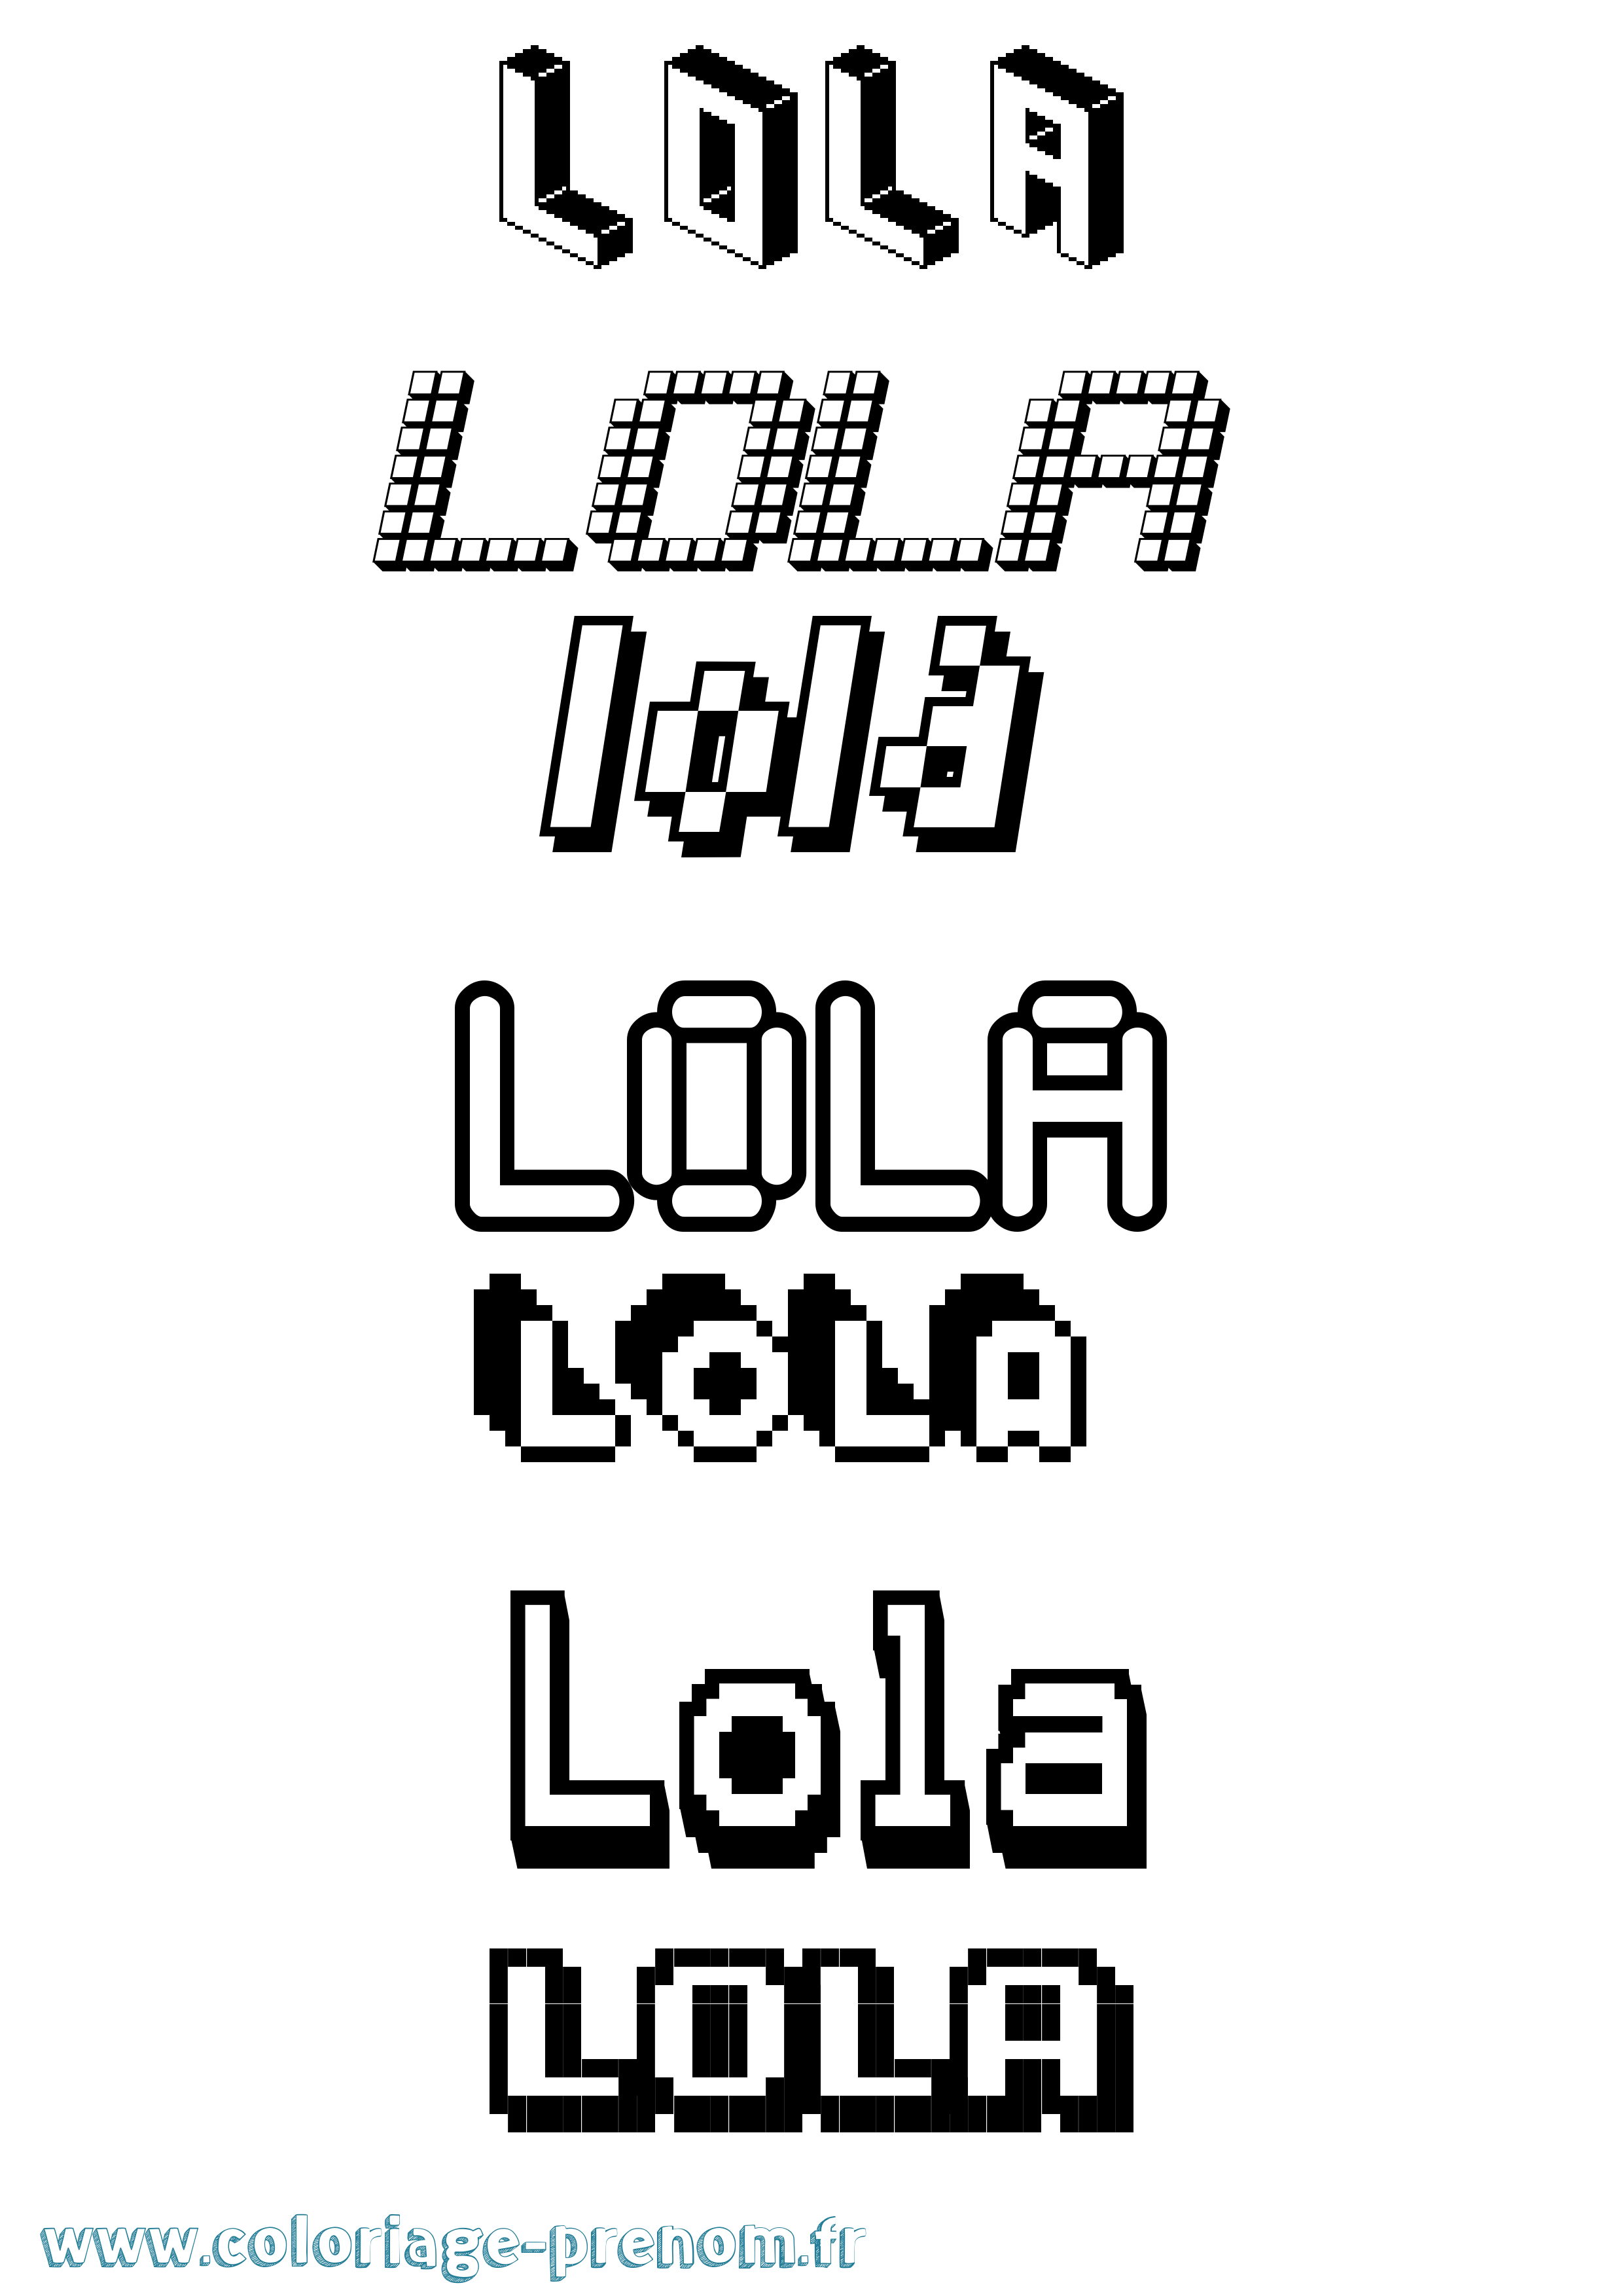 Coloriage prénom Lola Pixel